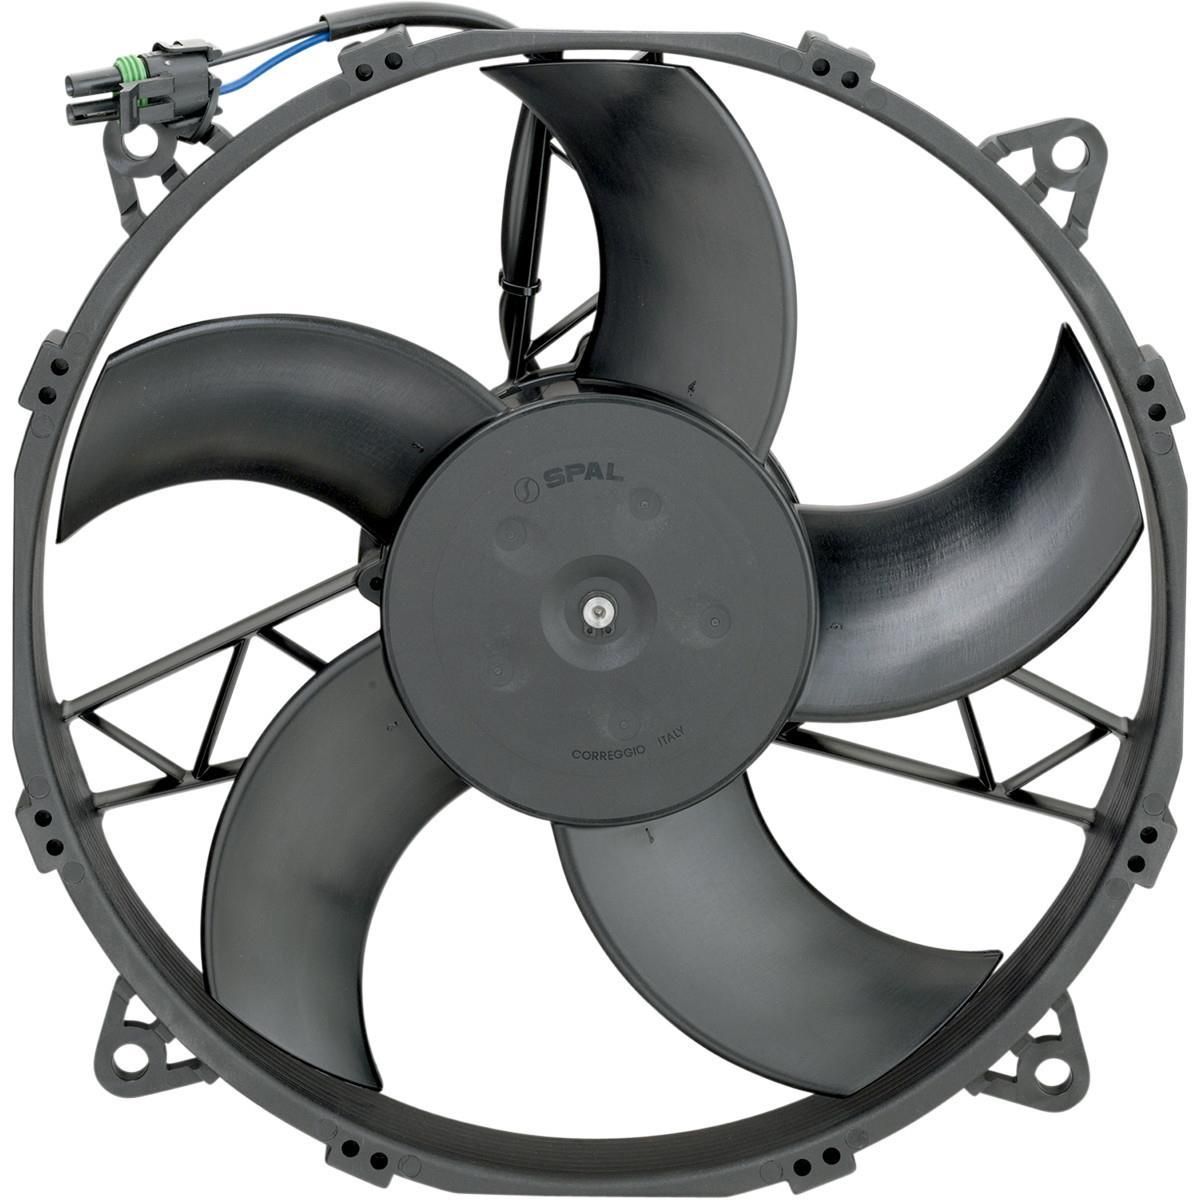 224O-MOOSE-UTILI-19010327 Hi-Performance Cooling Fan